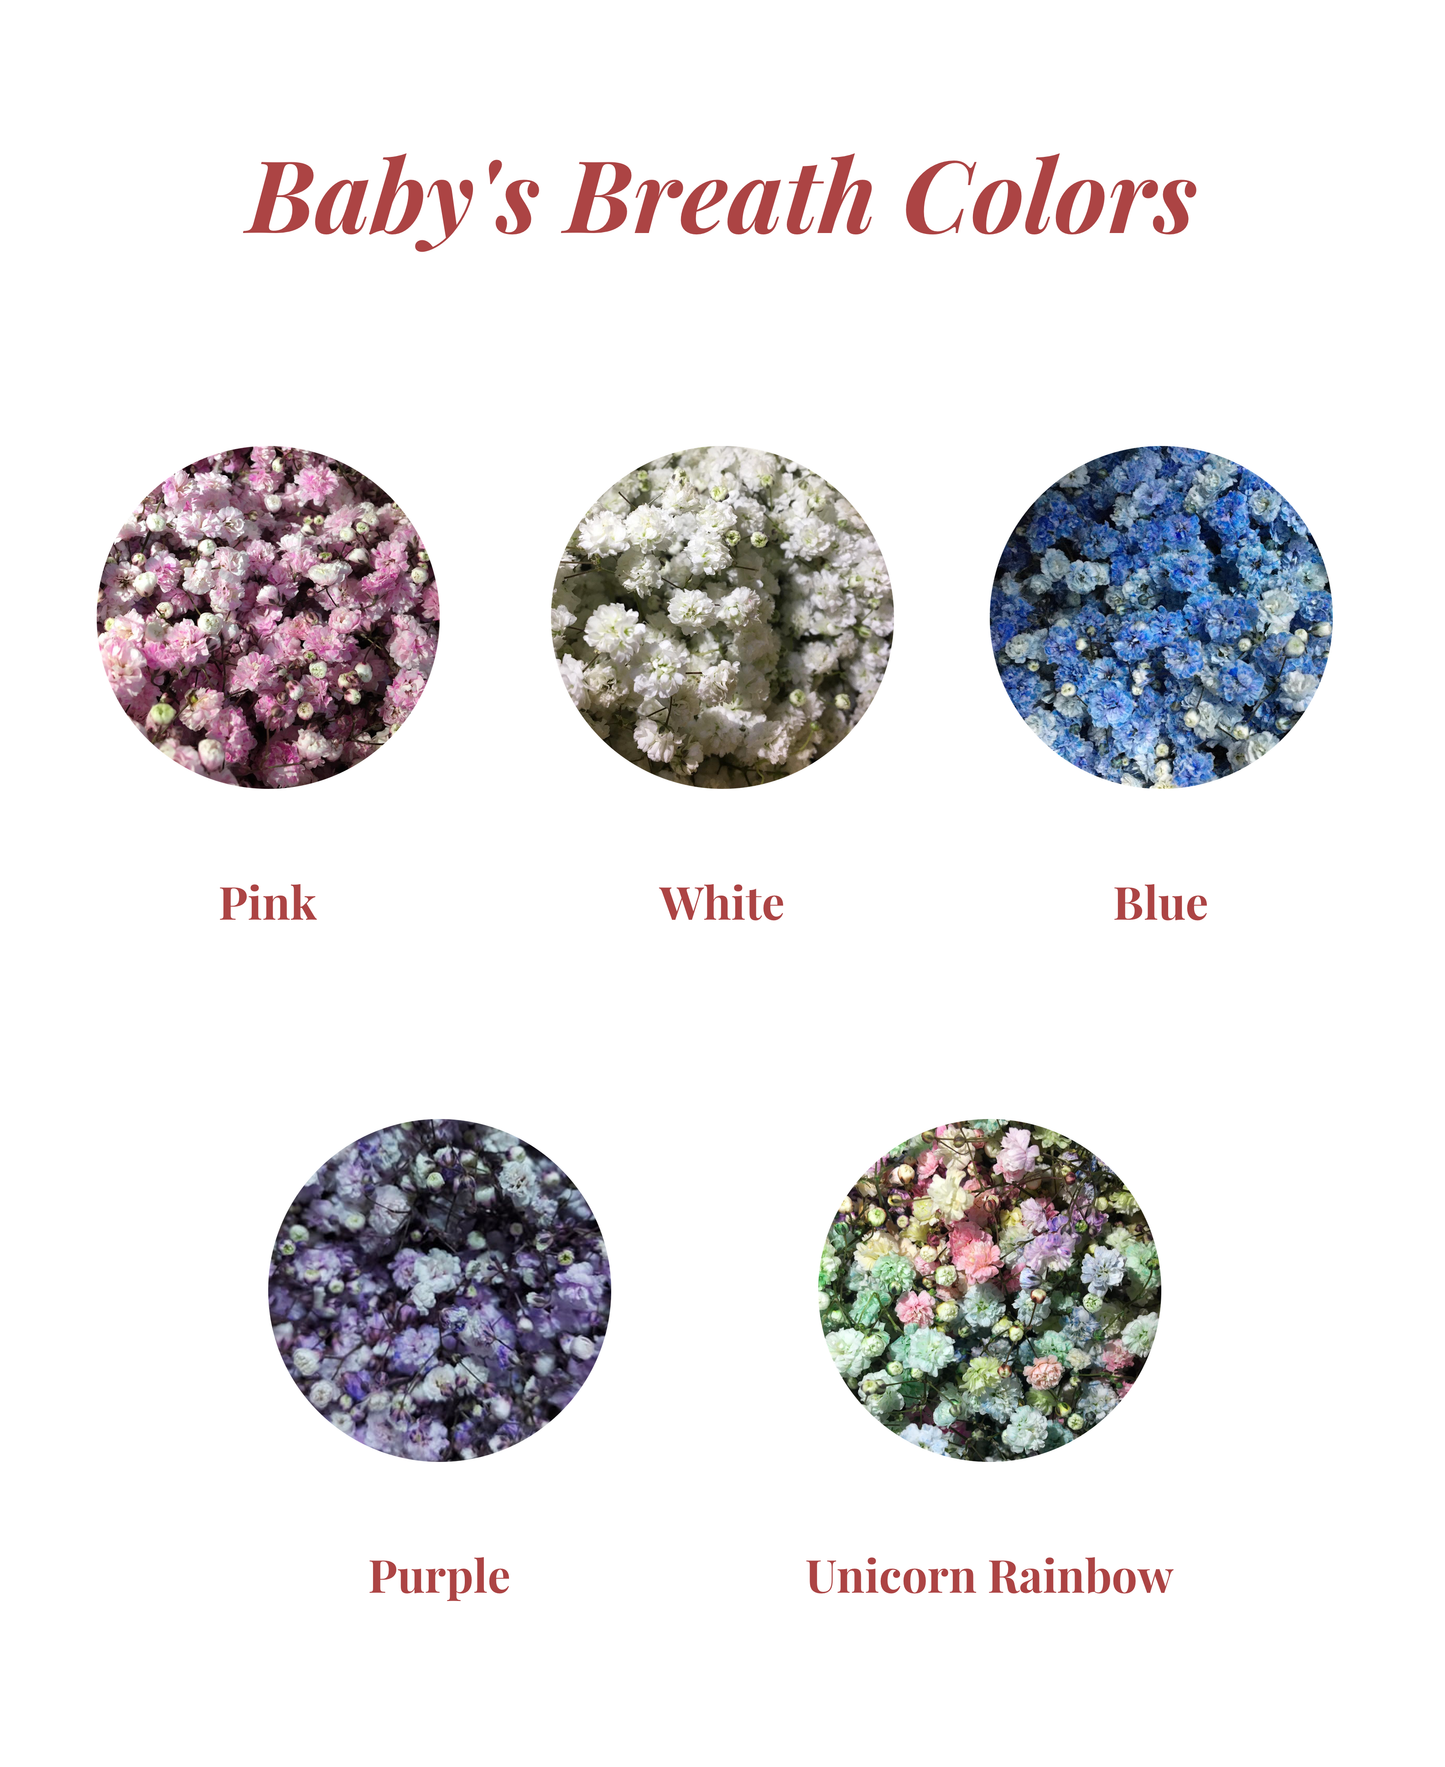 Baby's Breath Bouquet